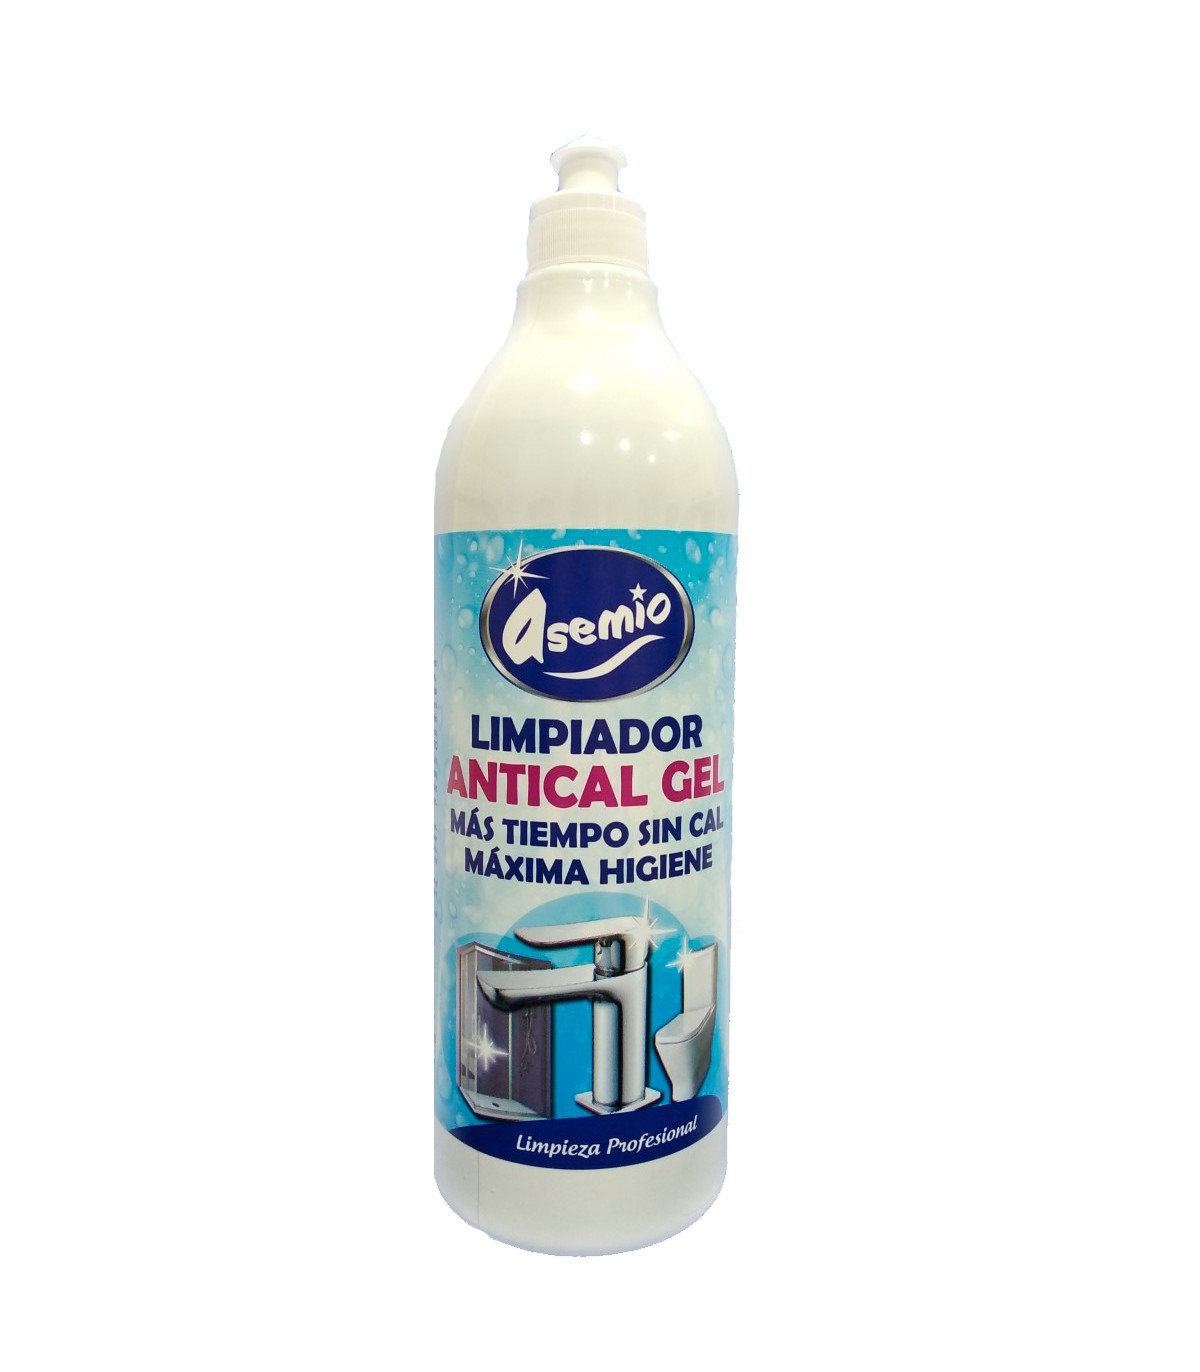  Limpiador para baño (antical) 1L